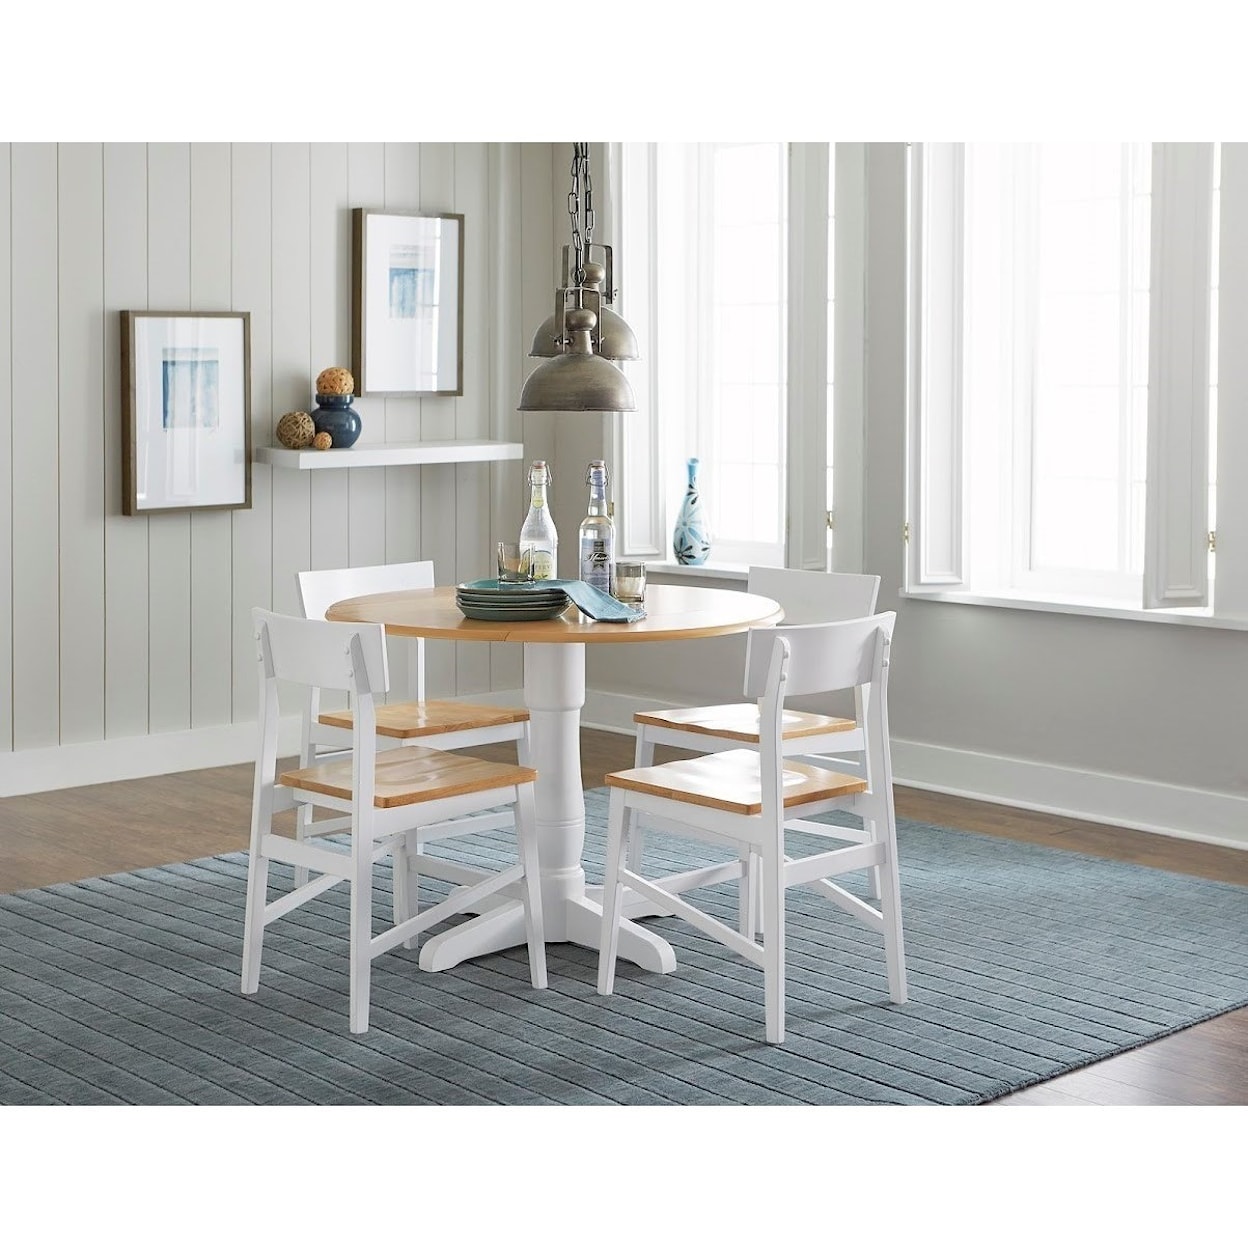 Progressive Furniture Christy Dining Chair